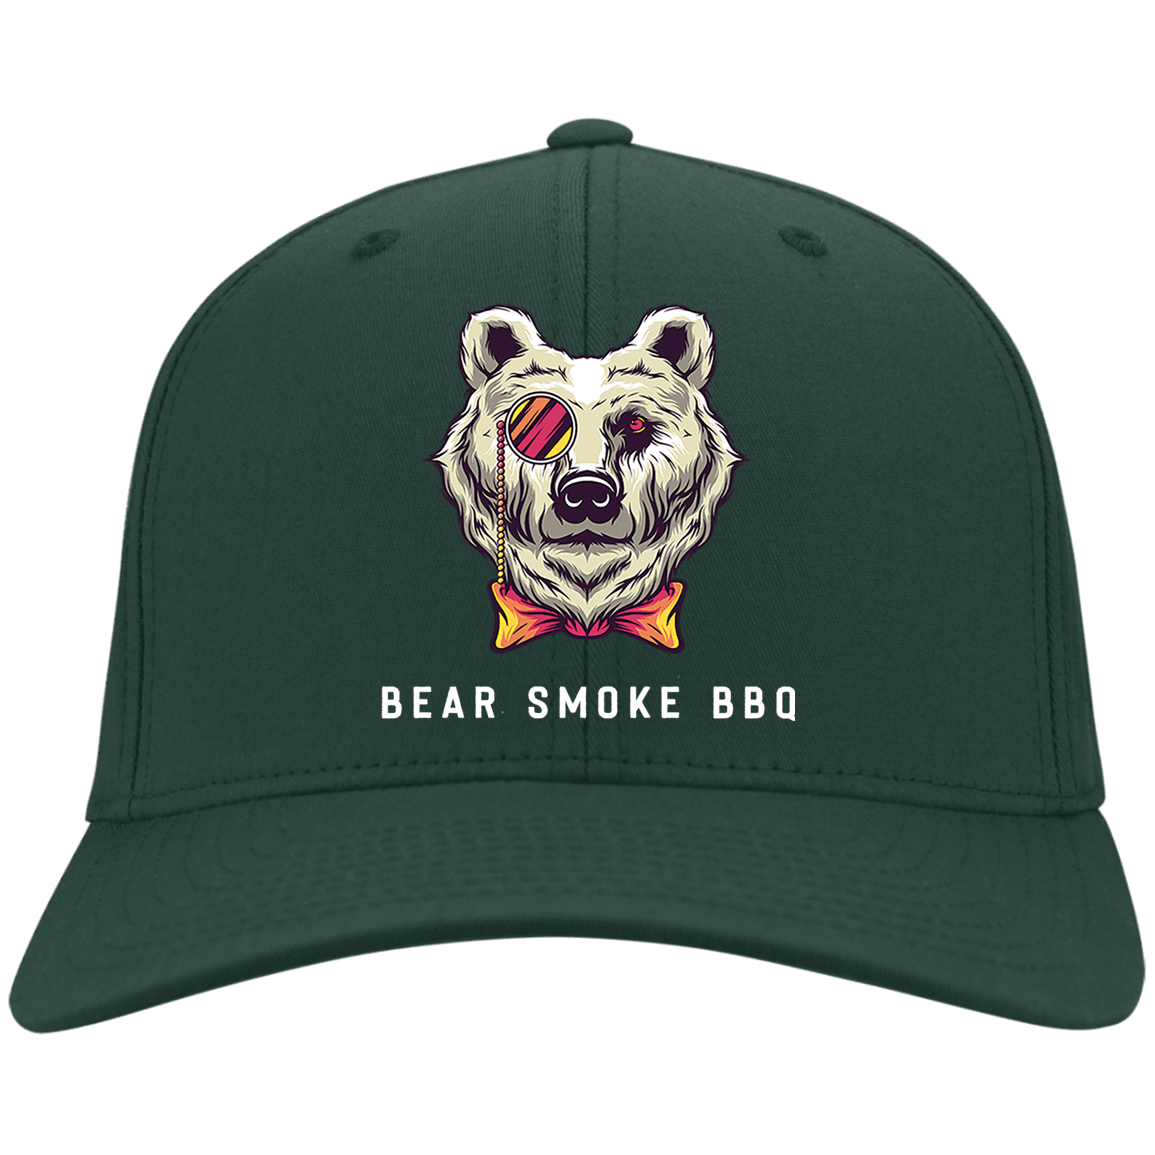 Bear Smoke BBQ Twill Baseball Cap - Bear Smoke BBQ